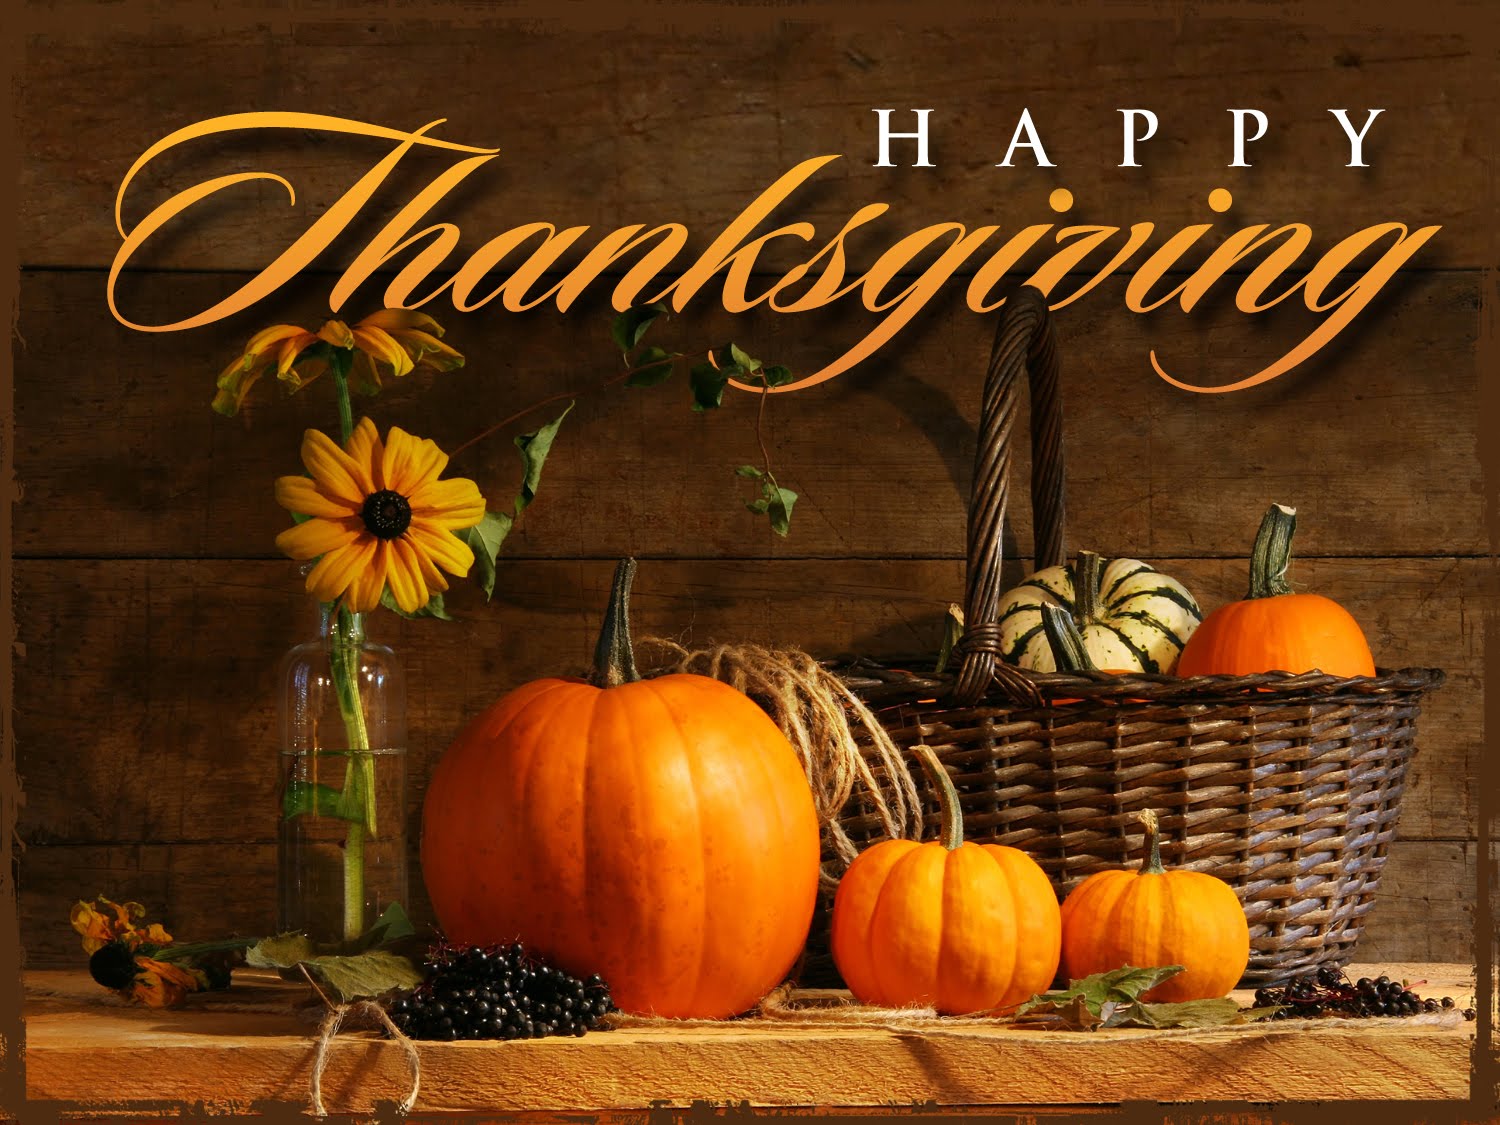 Happy Thanksgiving! - Intelligent Networks, Inc.